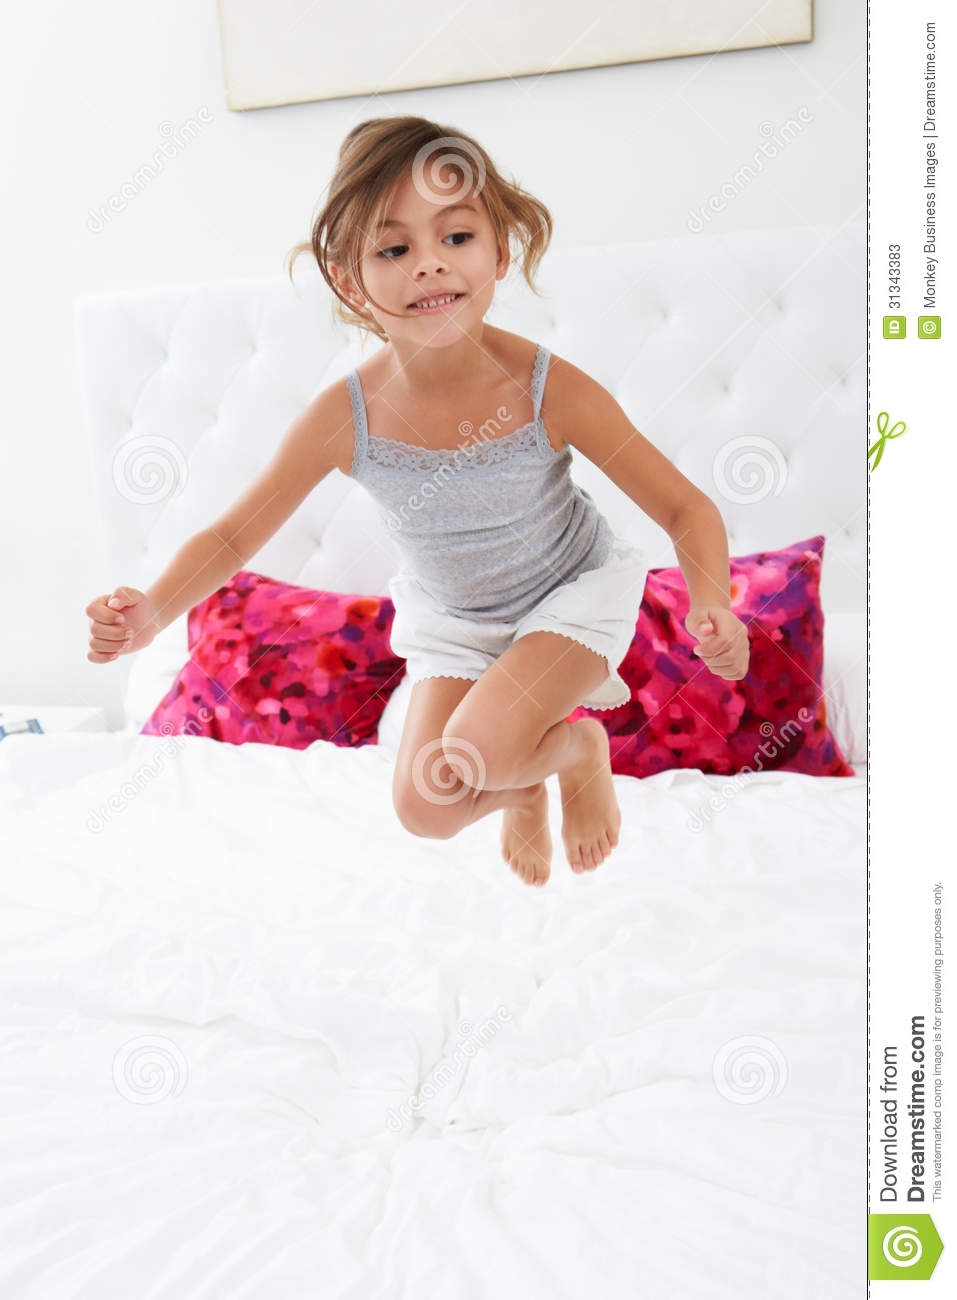 Girl Jumping On Bed Wearing Pajamas Stock Photos   Image  31343383